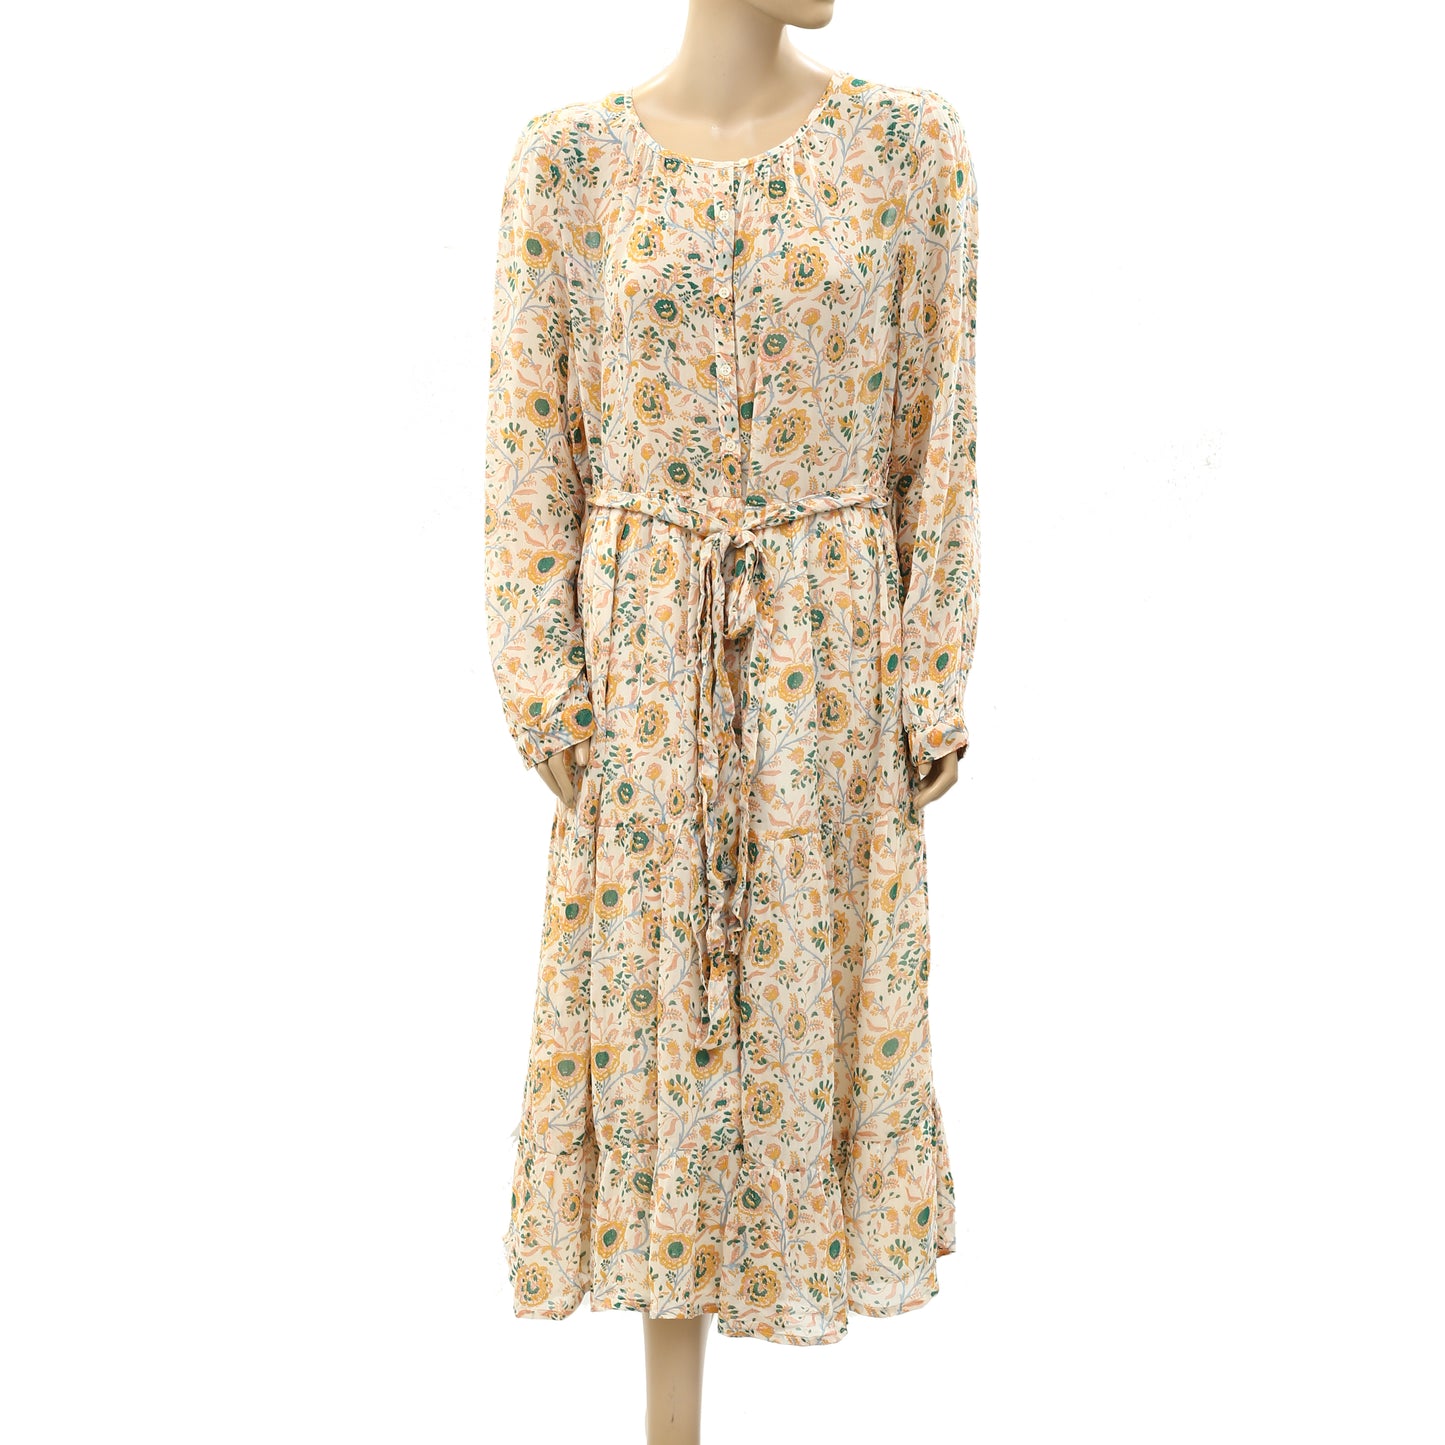 LEON & HARPER Floral Printed Midi Dress